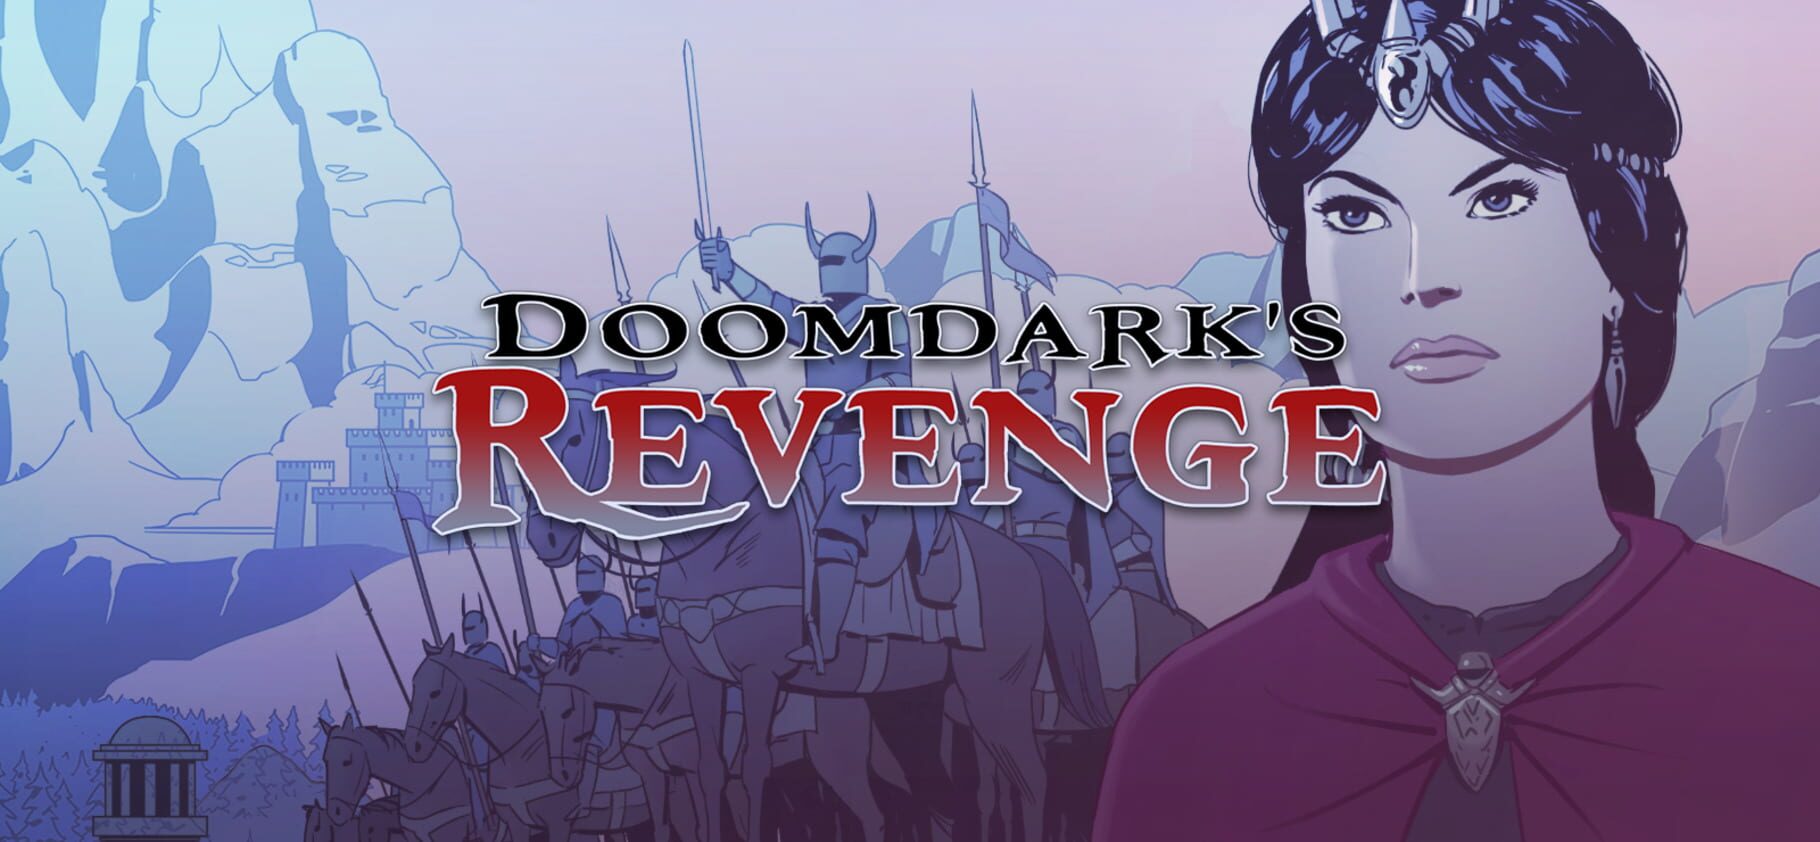 Arte - Doomdark's Revenge